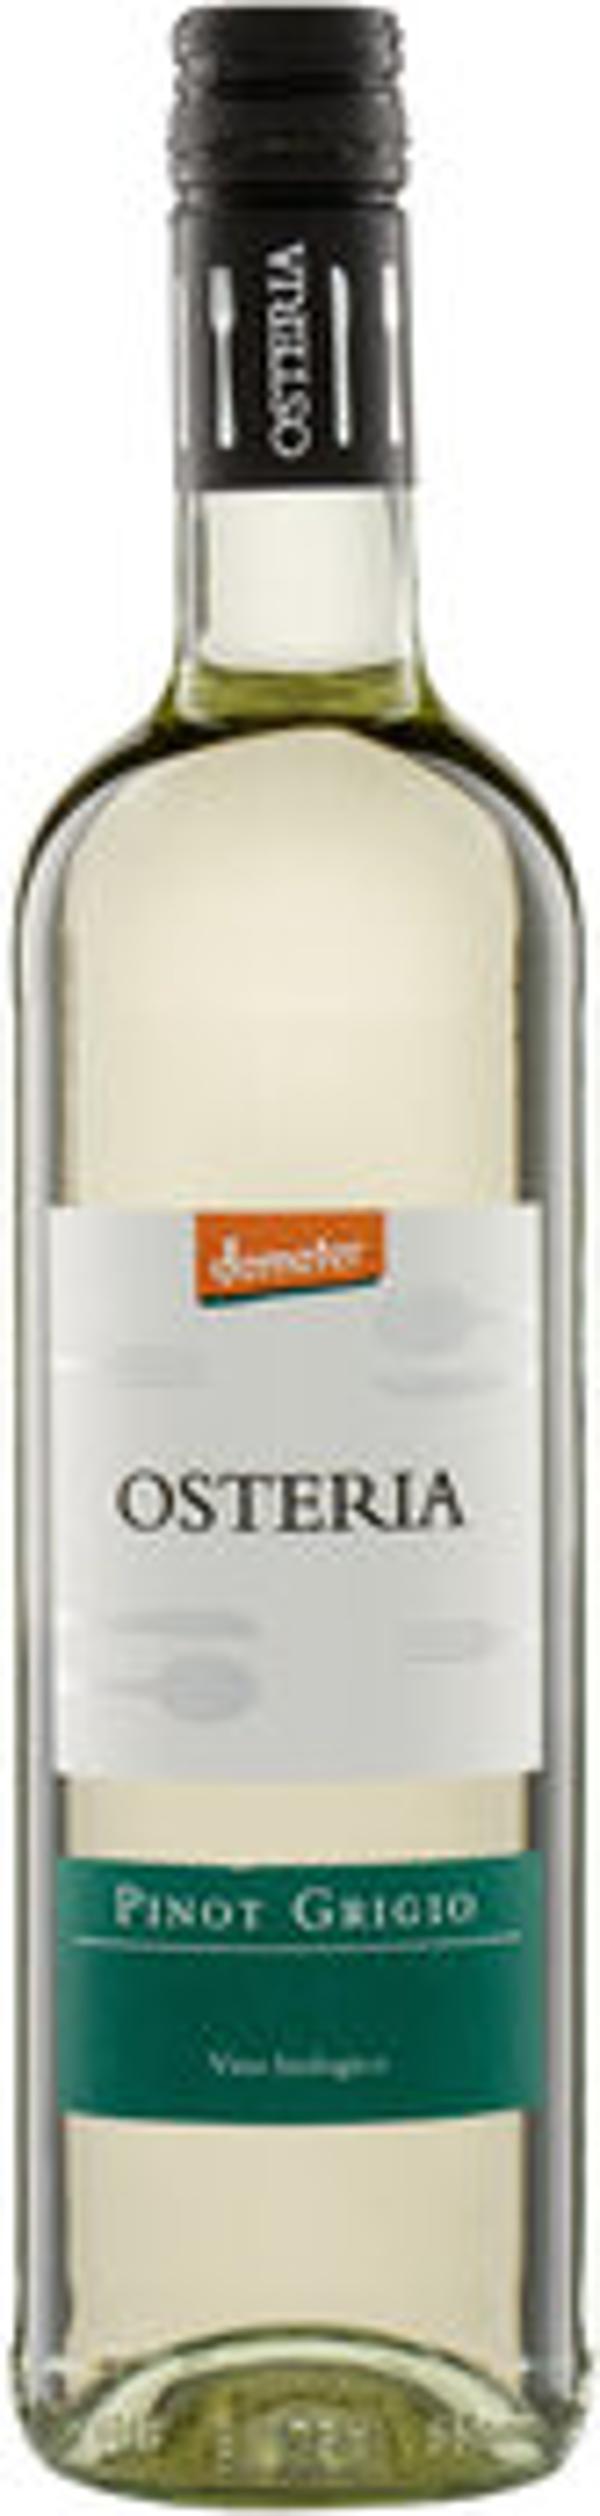 Produktfoto zu OSTERIA Pinot Grigio IGT Demeter 0,75L